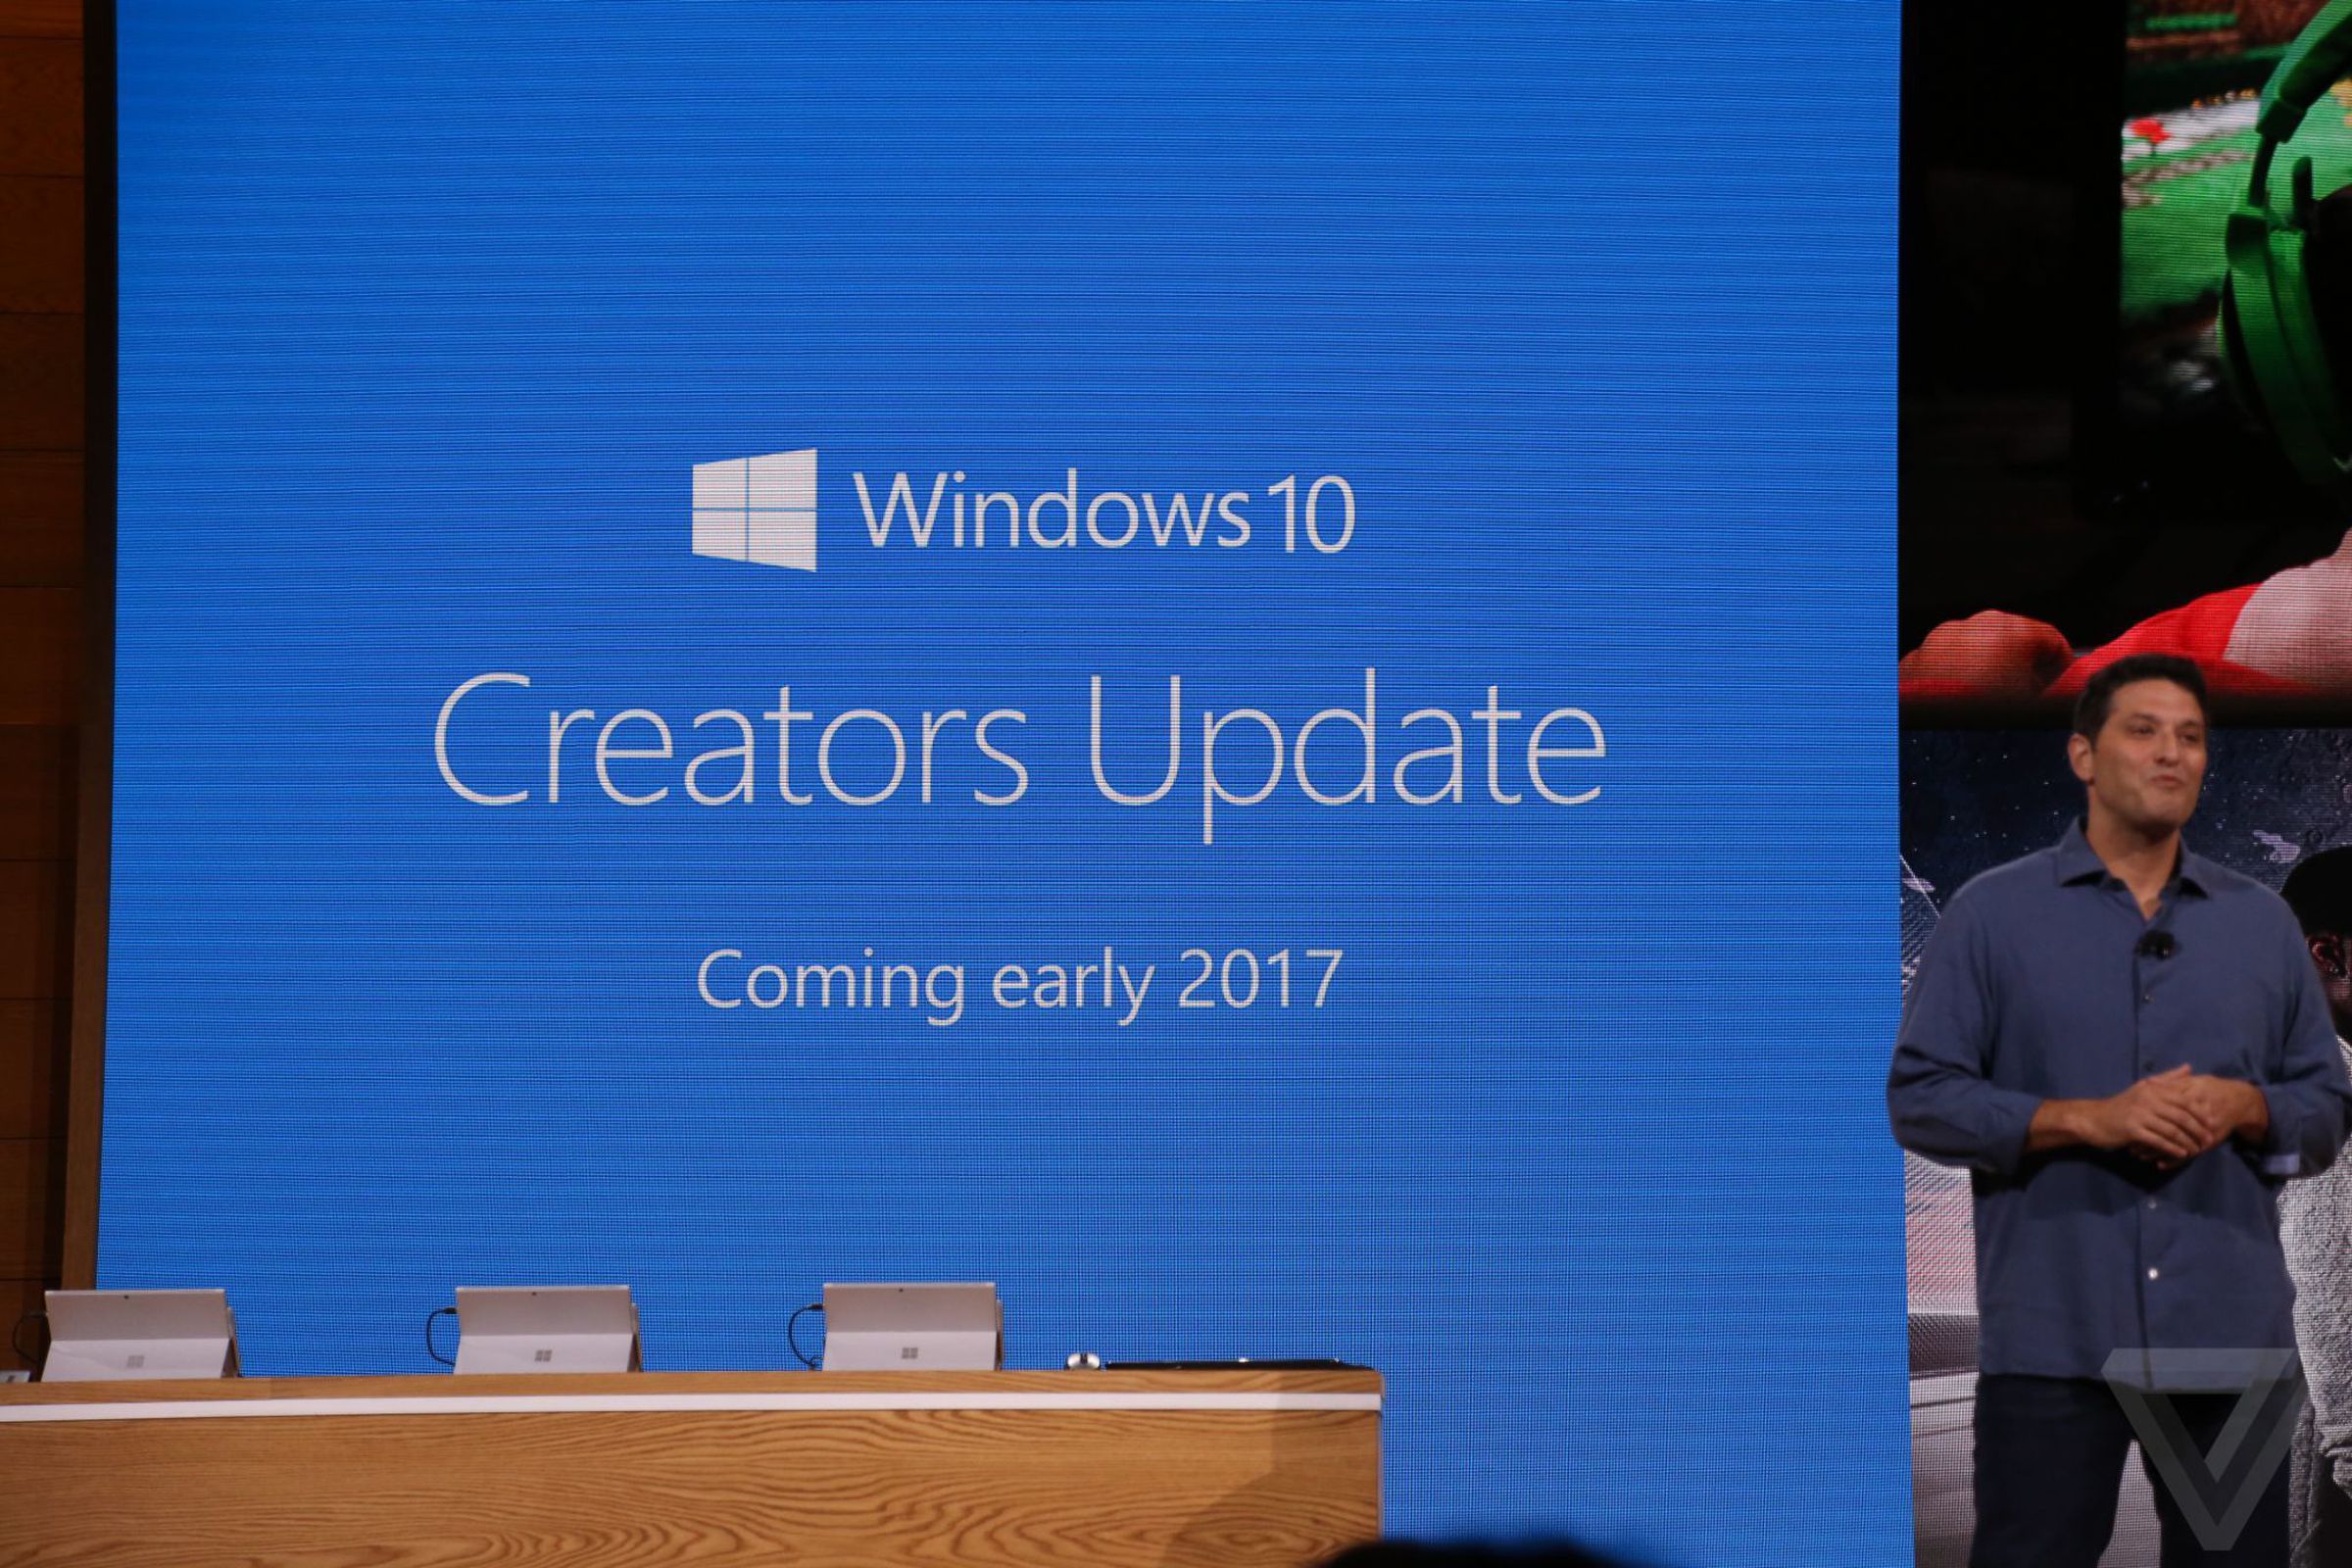 Windows 10 Creators Update announcement photos